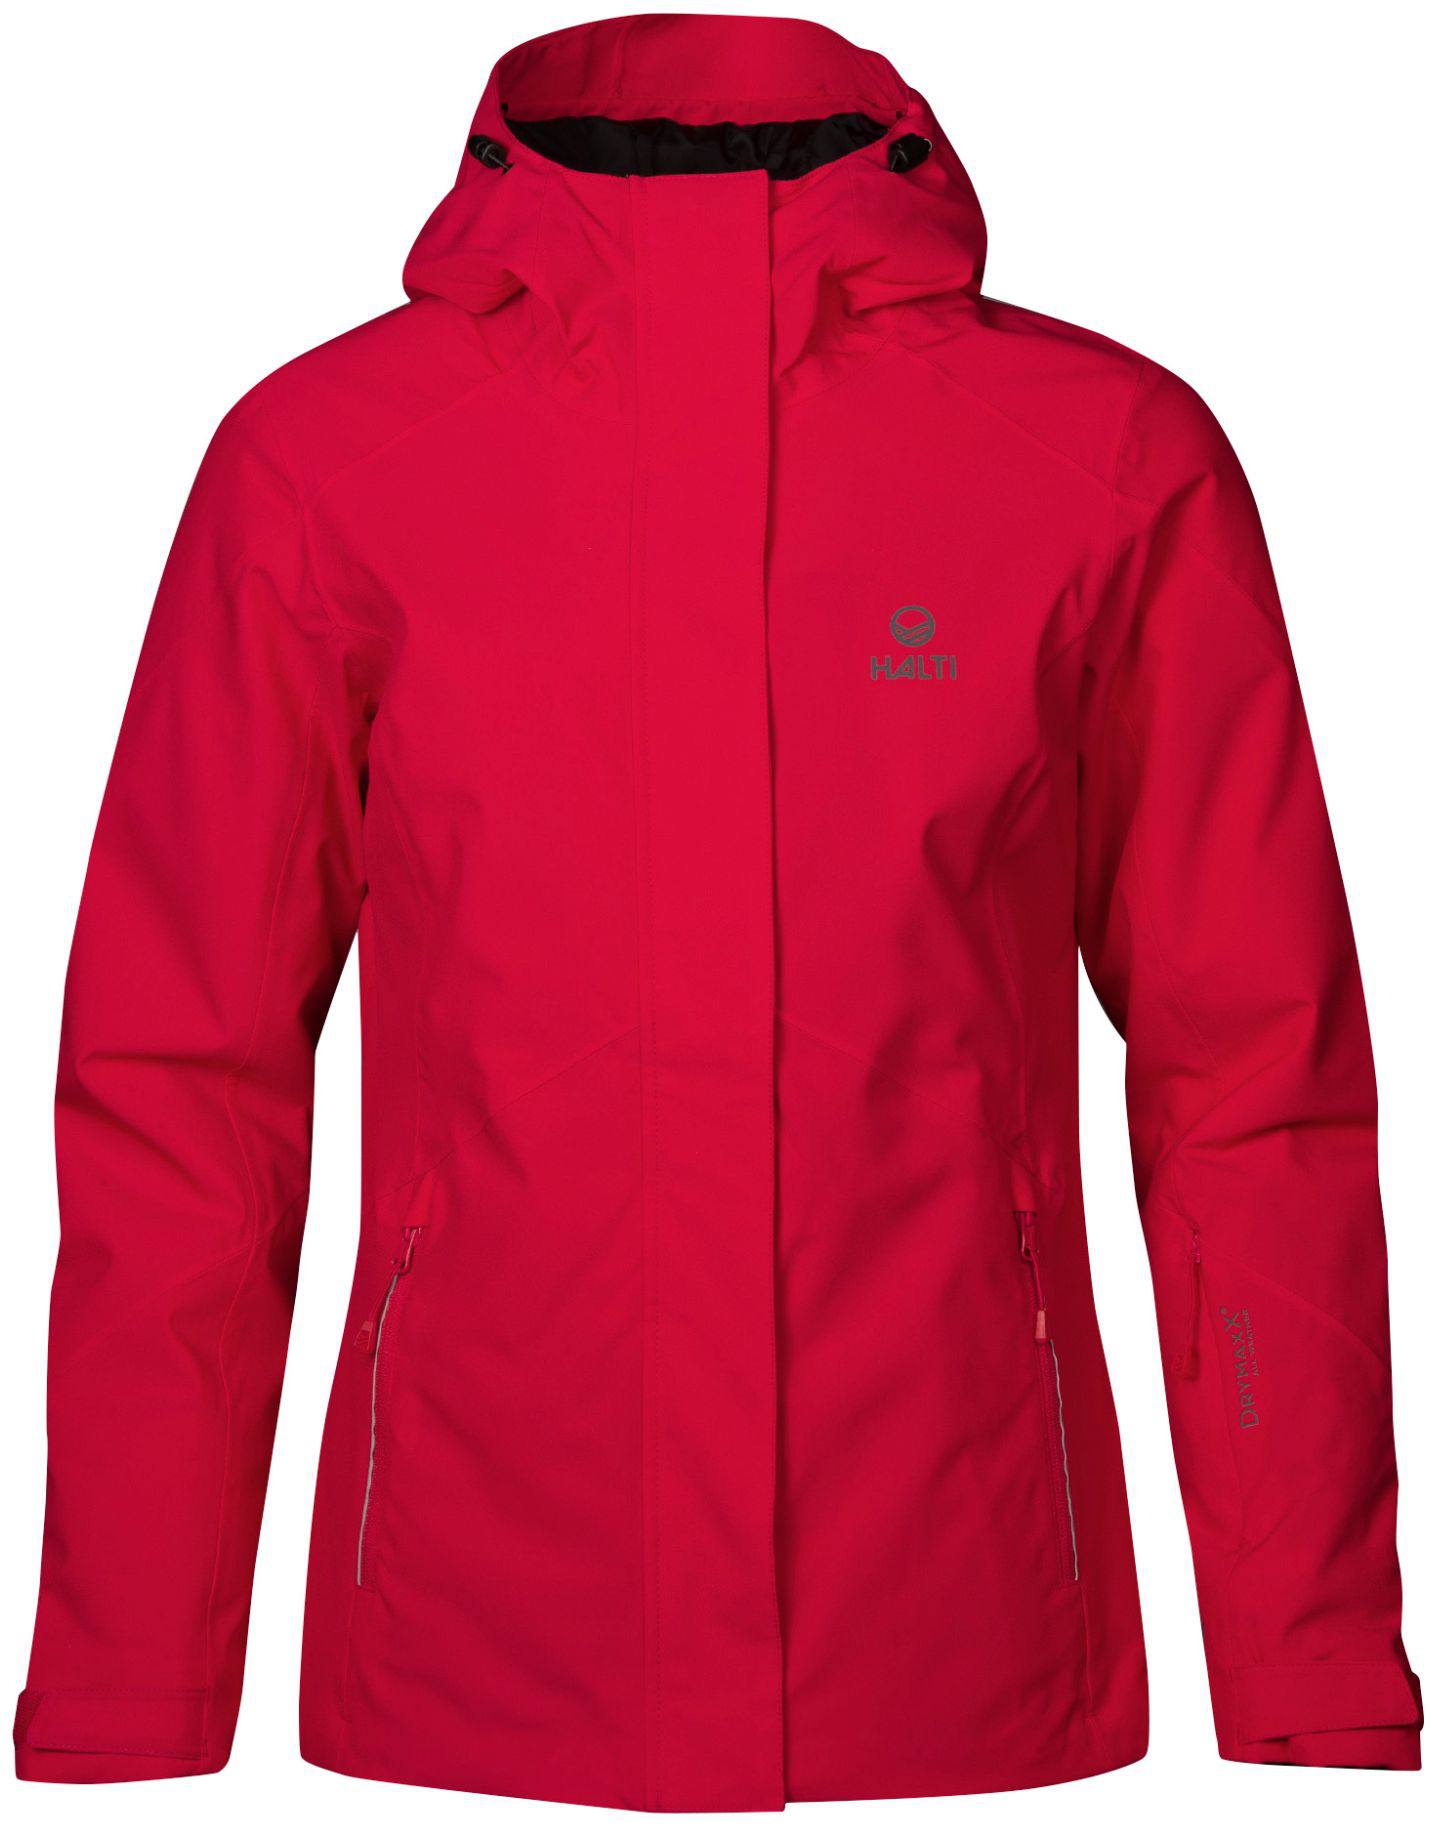 Halti Women’s Corinne Ski Jacket Red 46